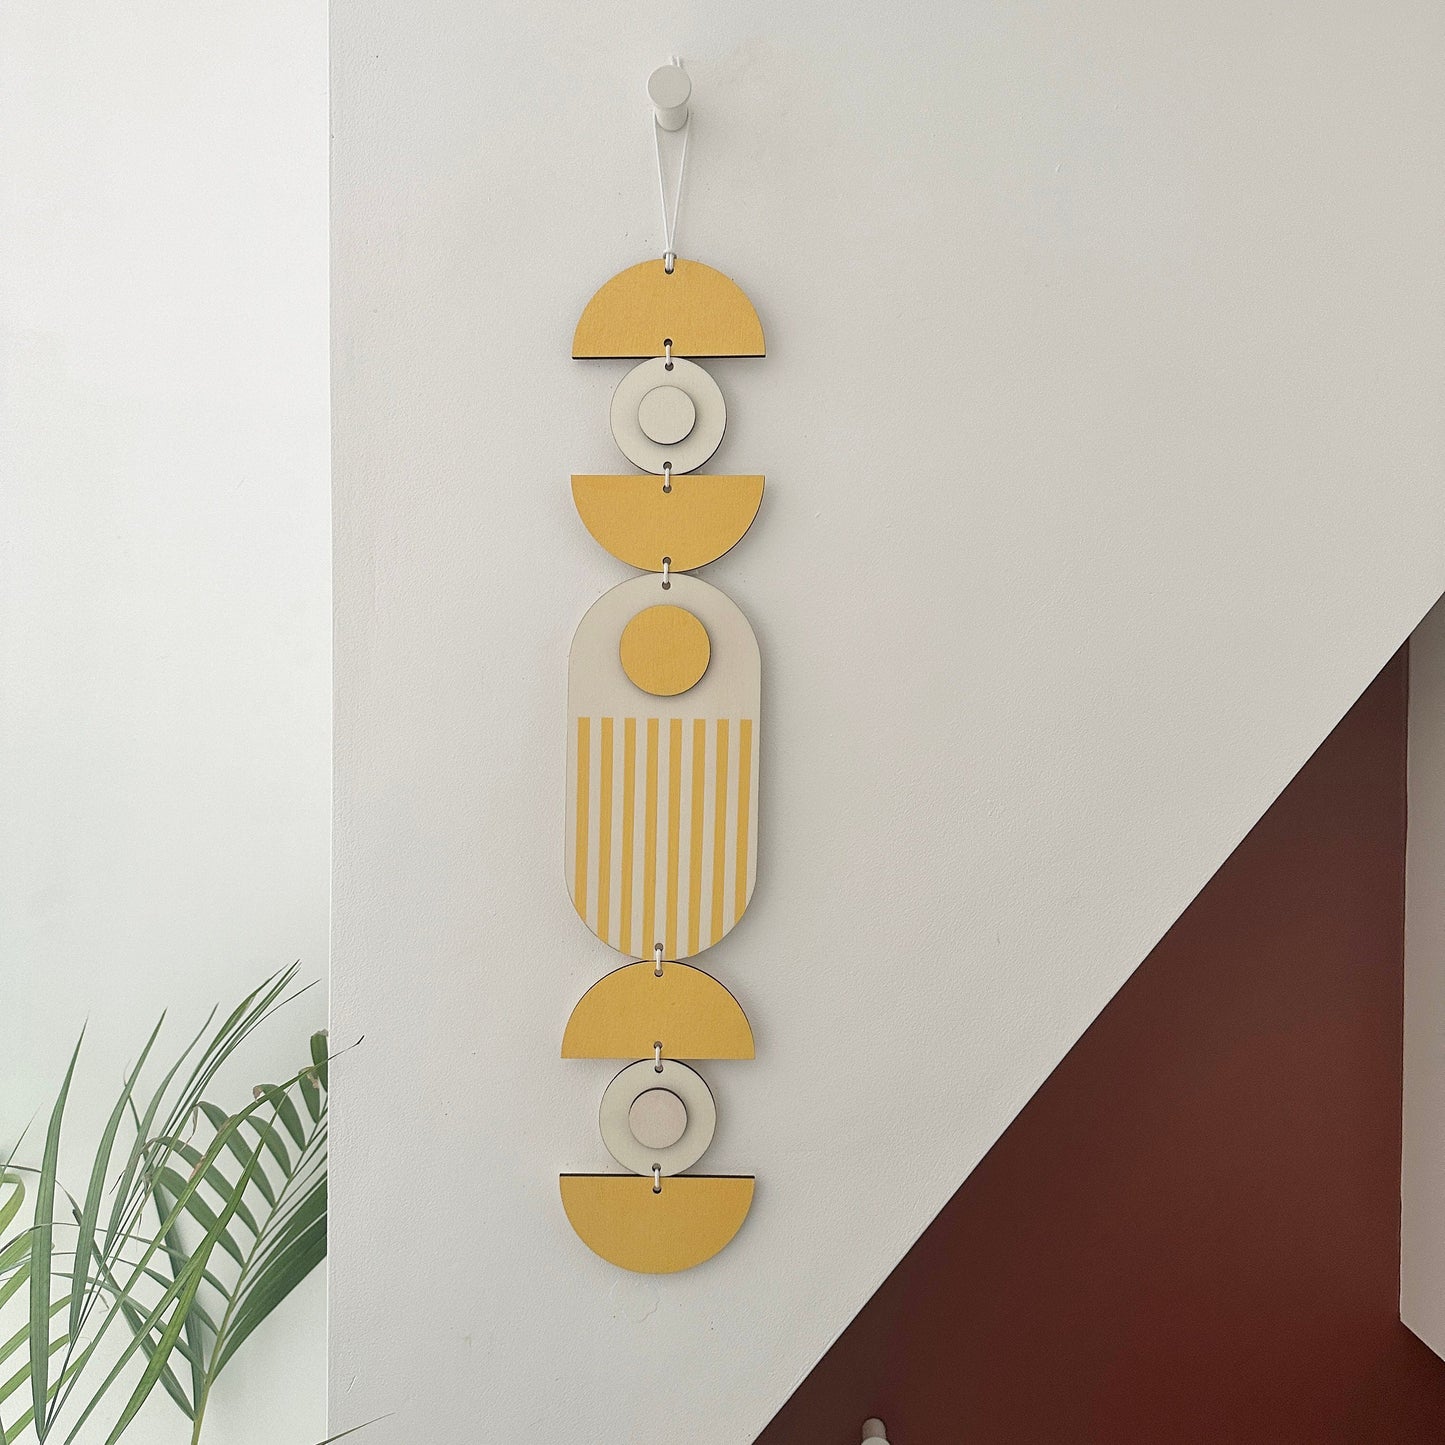 Bright Pastel Wall Hangings - Geometric Artwork - Colourful Home Decor - Fun Home Decor - Slim Wall Art - Long Wall Hanging - Fun Art